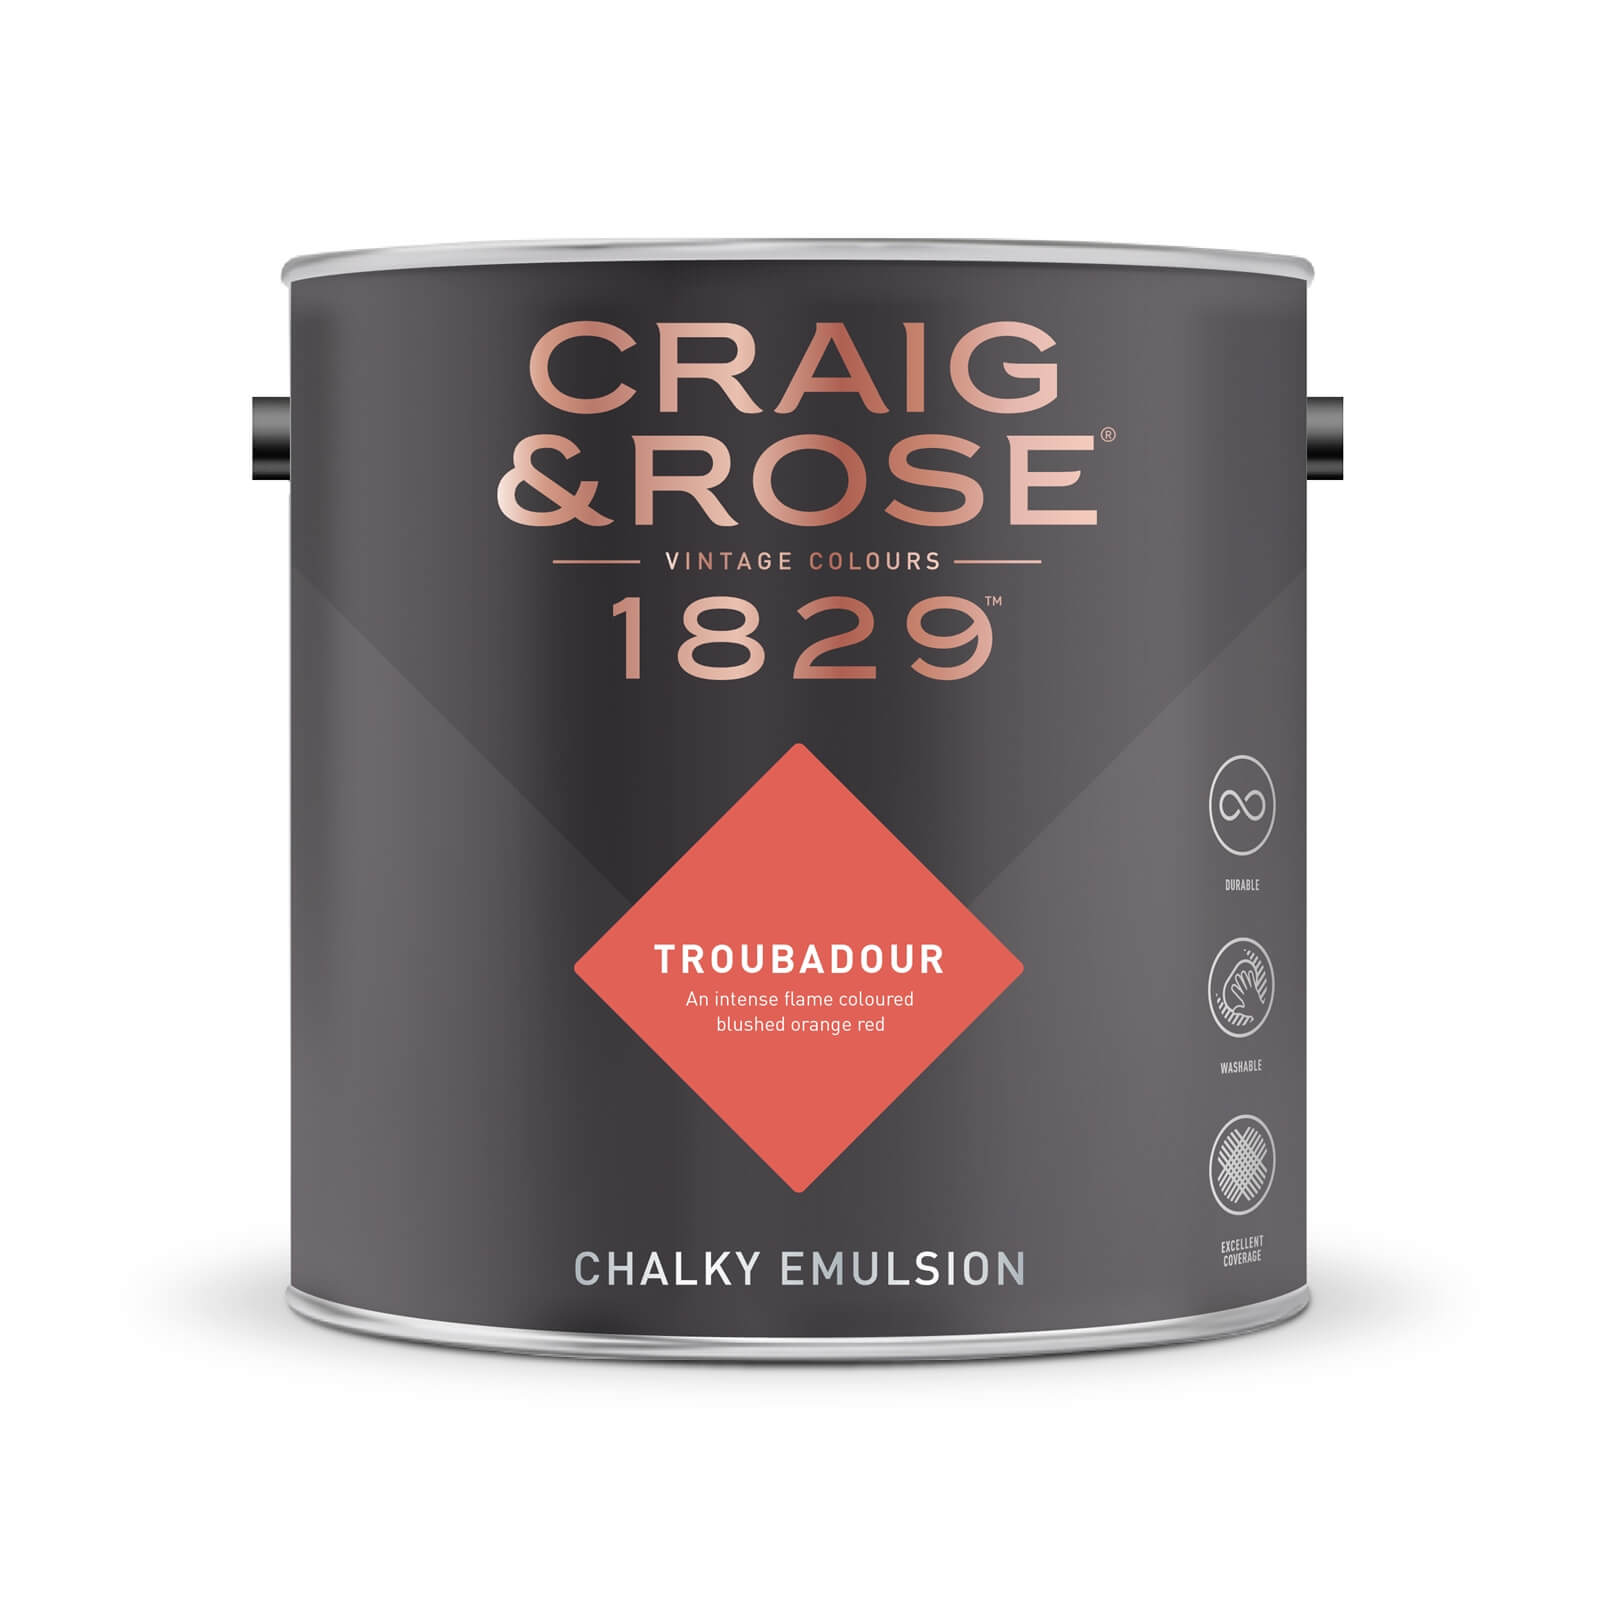 Craig & Rose 1829 Chalky Emulsion Paint Troubadour - Tester 50ml